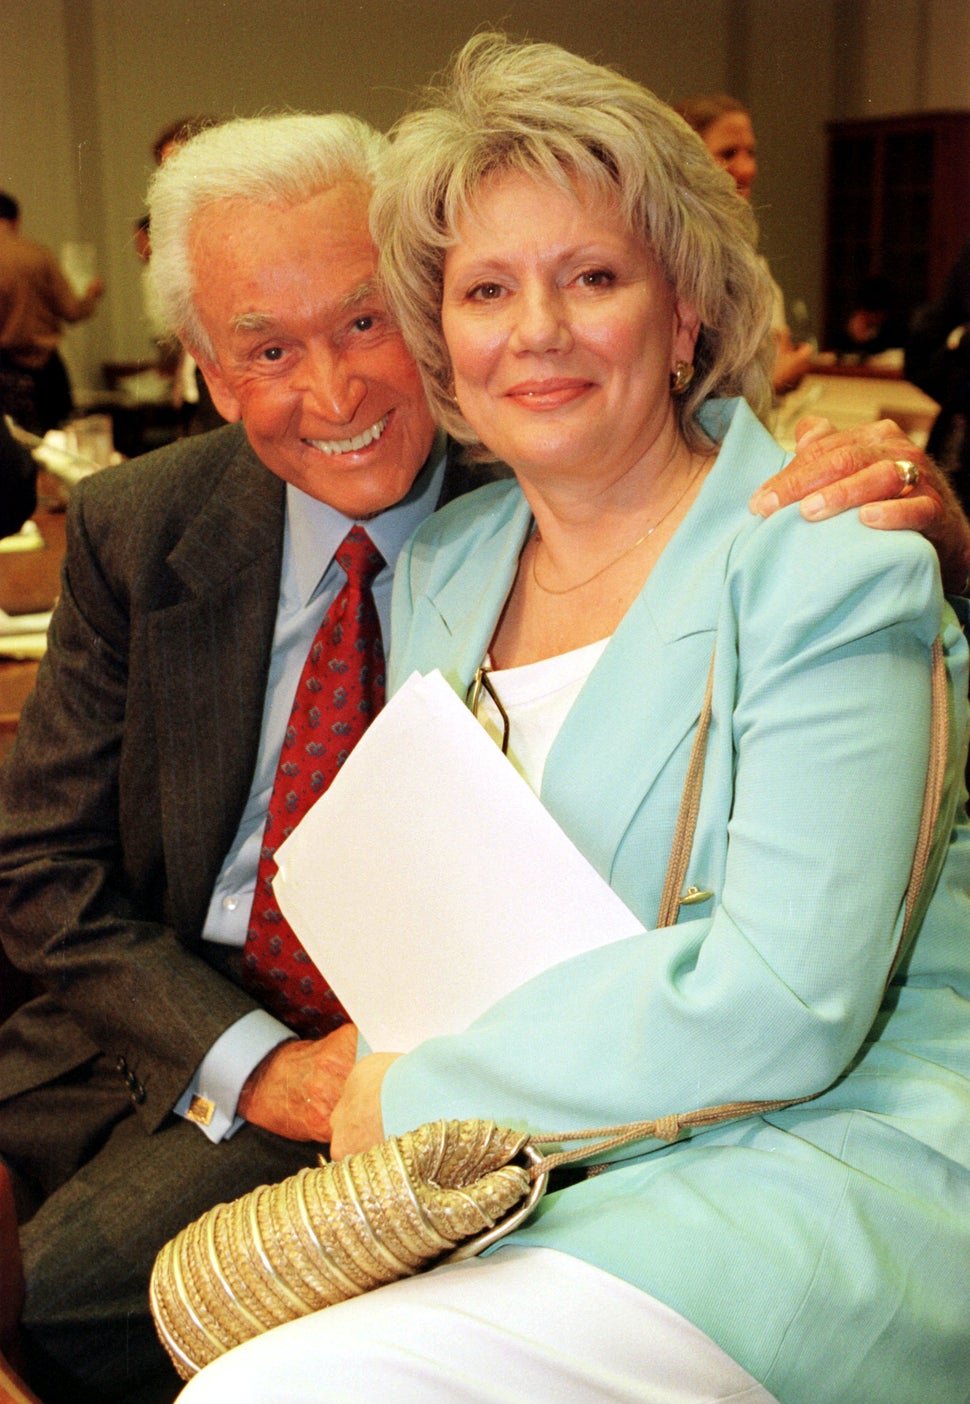 Bob Barker and Nancy Burnet